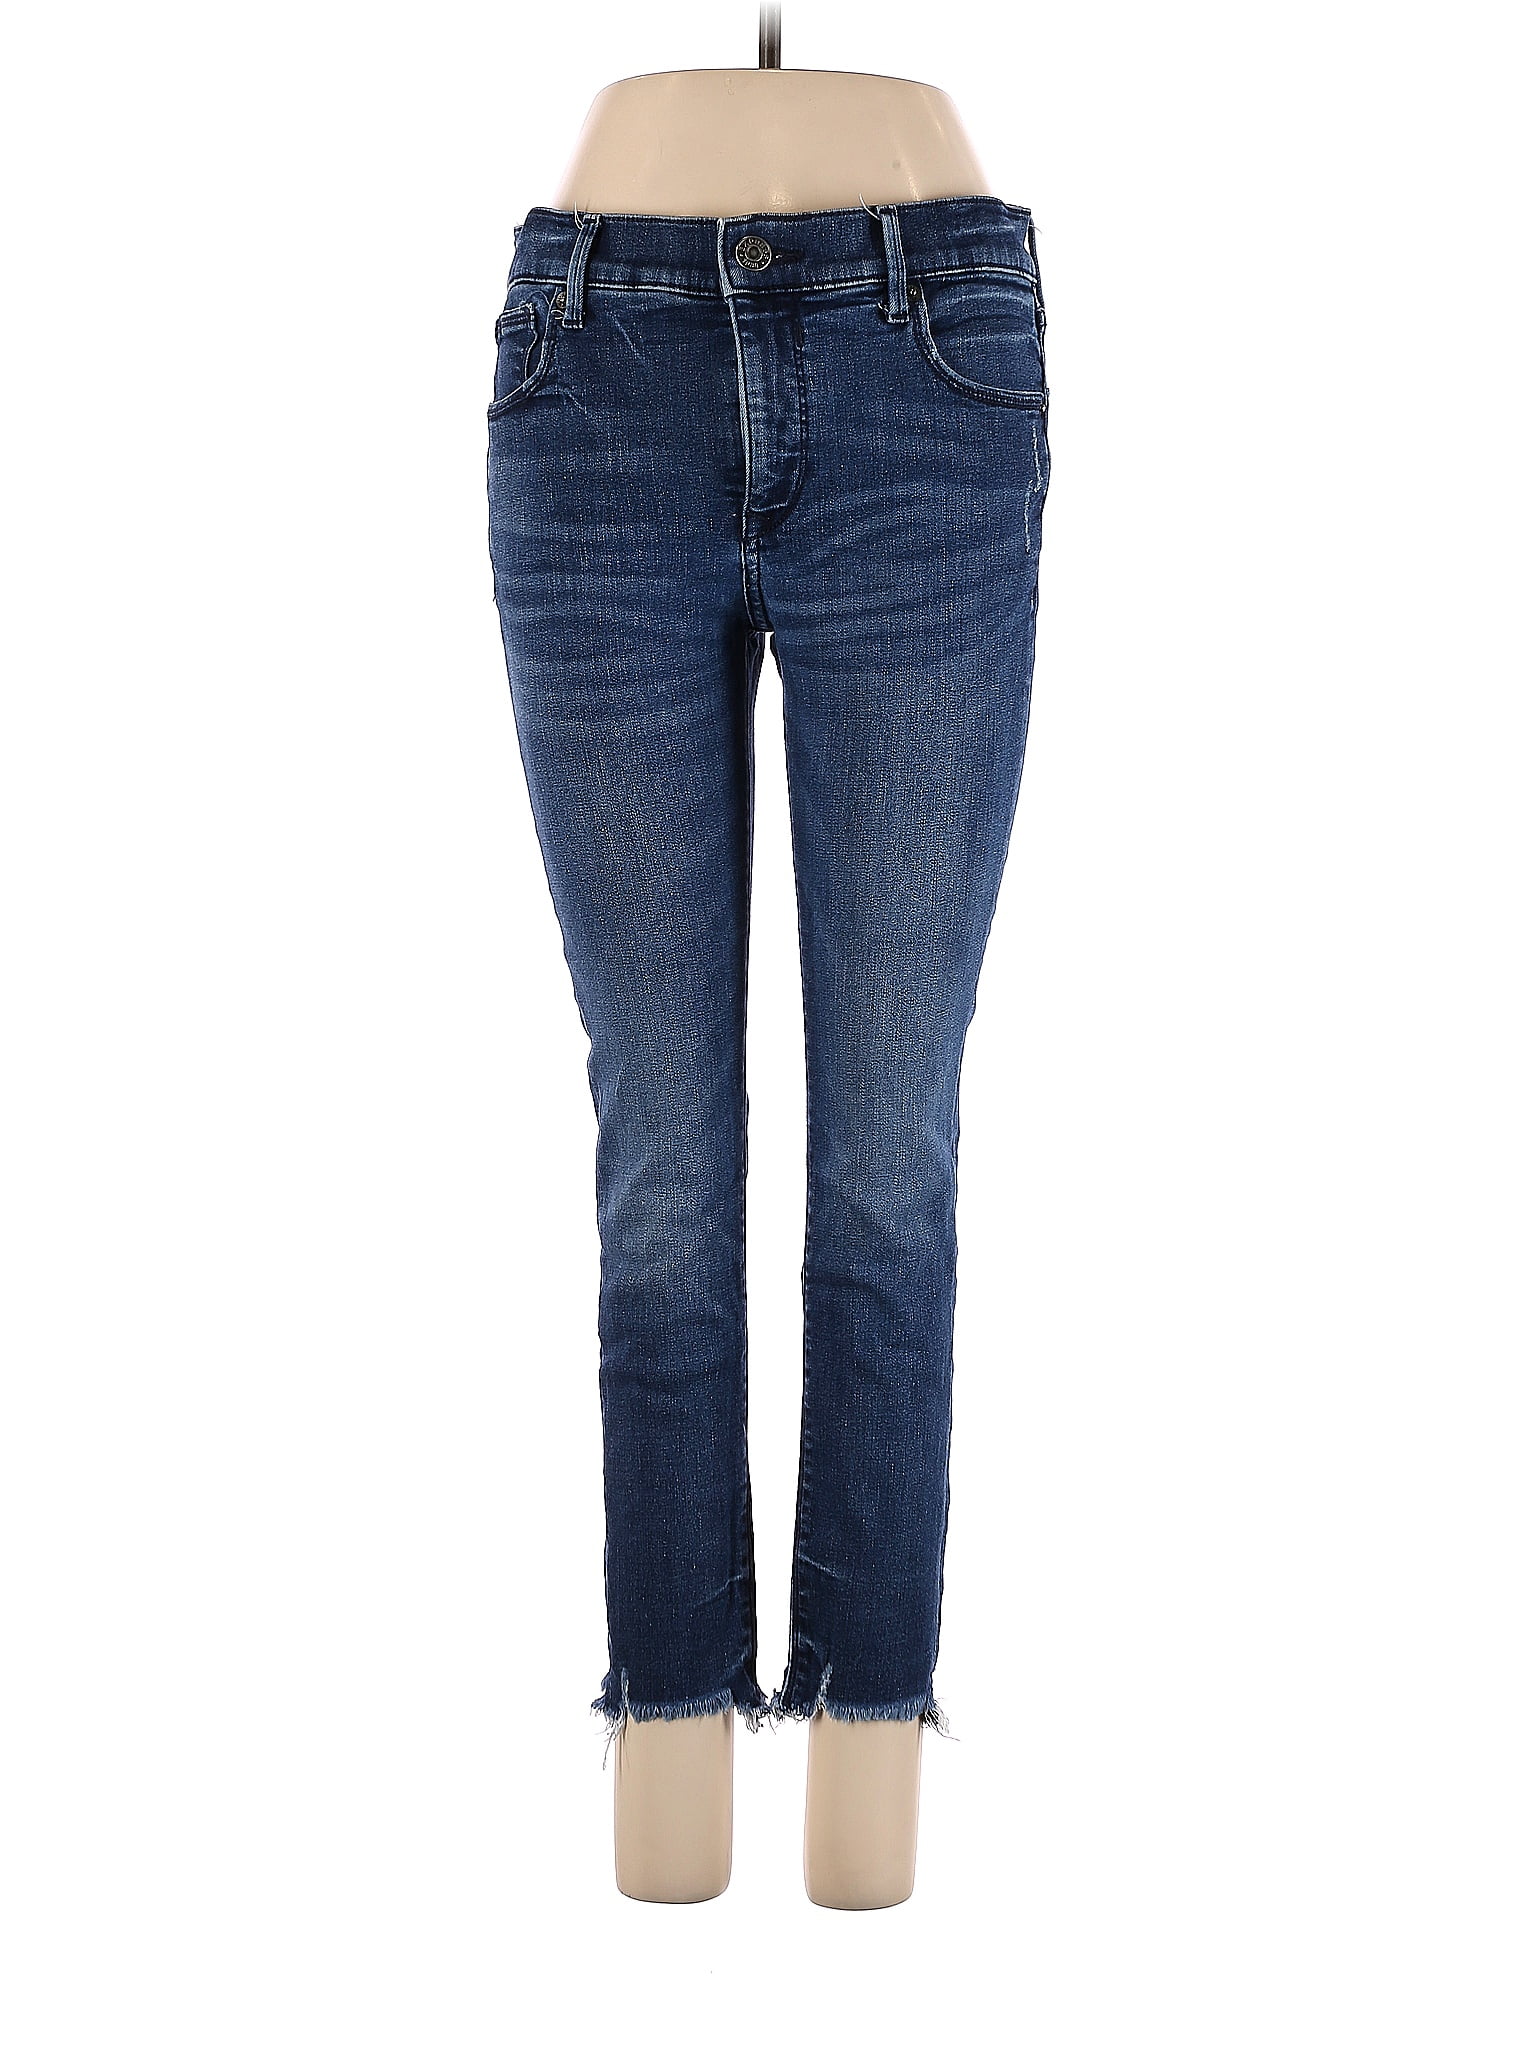 Express Solid Blue Jeans Size 8 - 83% off | thredUP